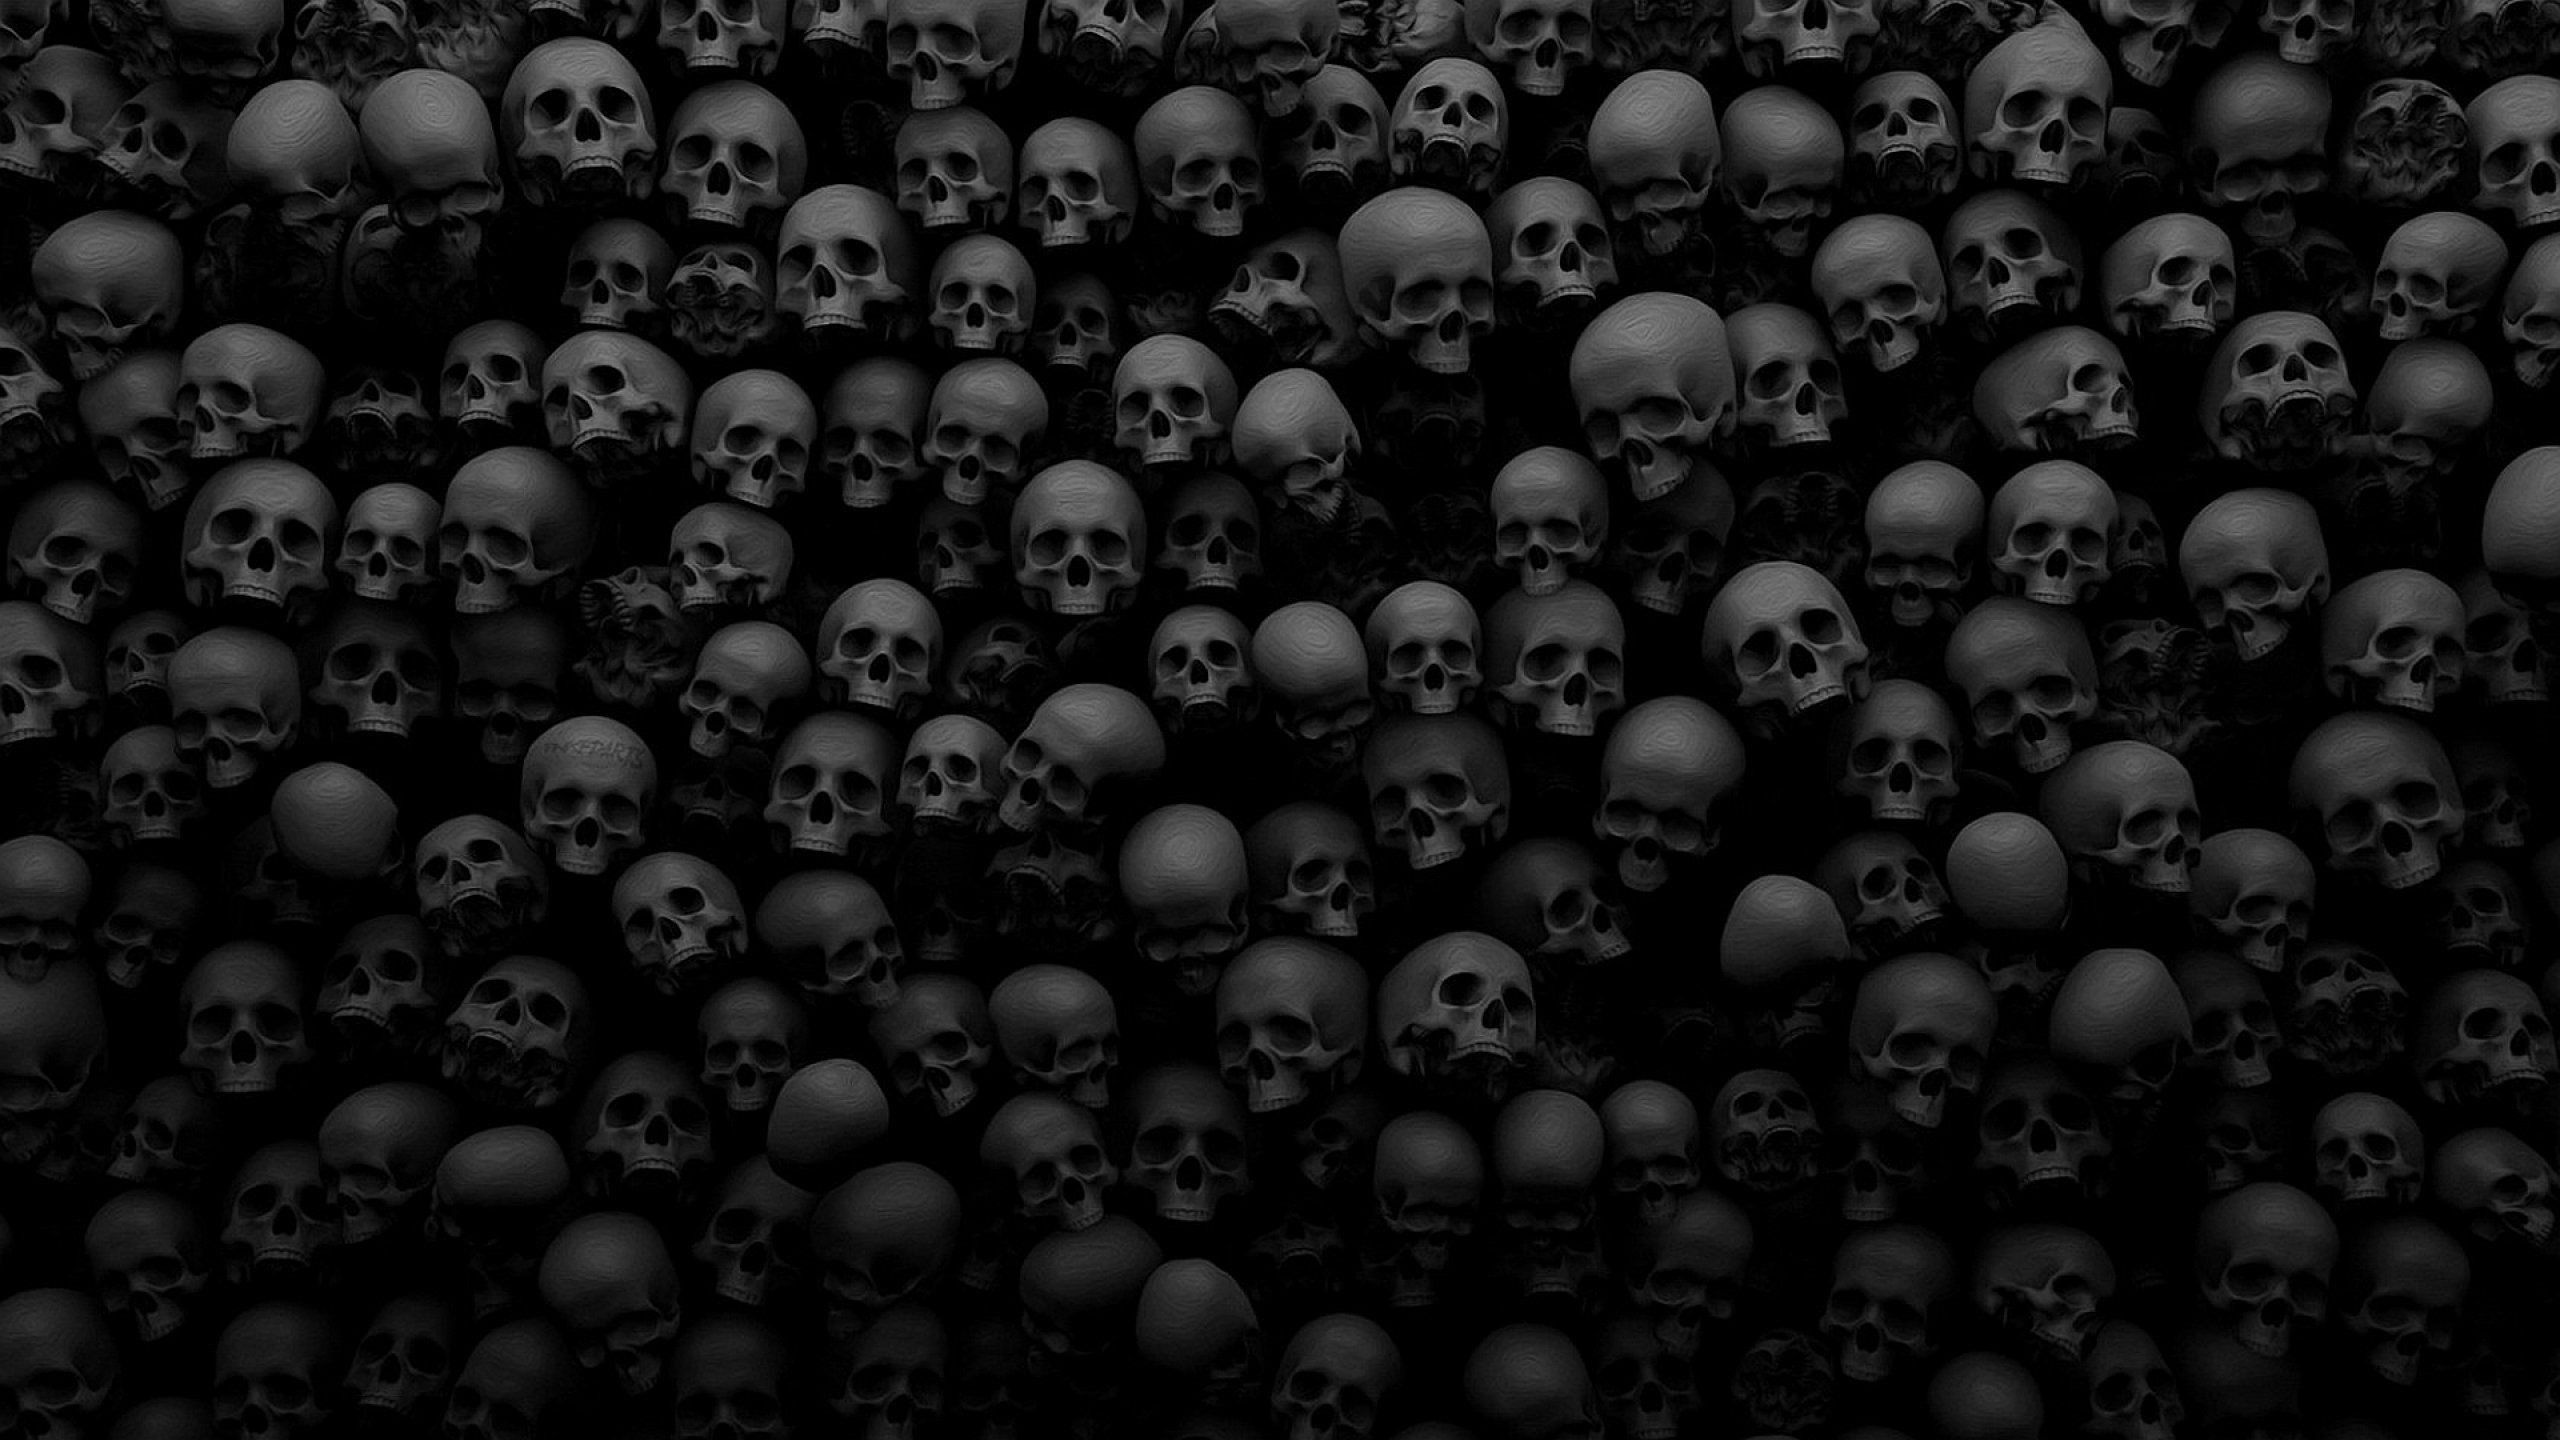 DARK evil horror spooky creepy scary wallpaper 2560x1440. Black skulls wallpaper, Scary wallpaper, Skull wallpaper